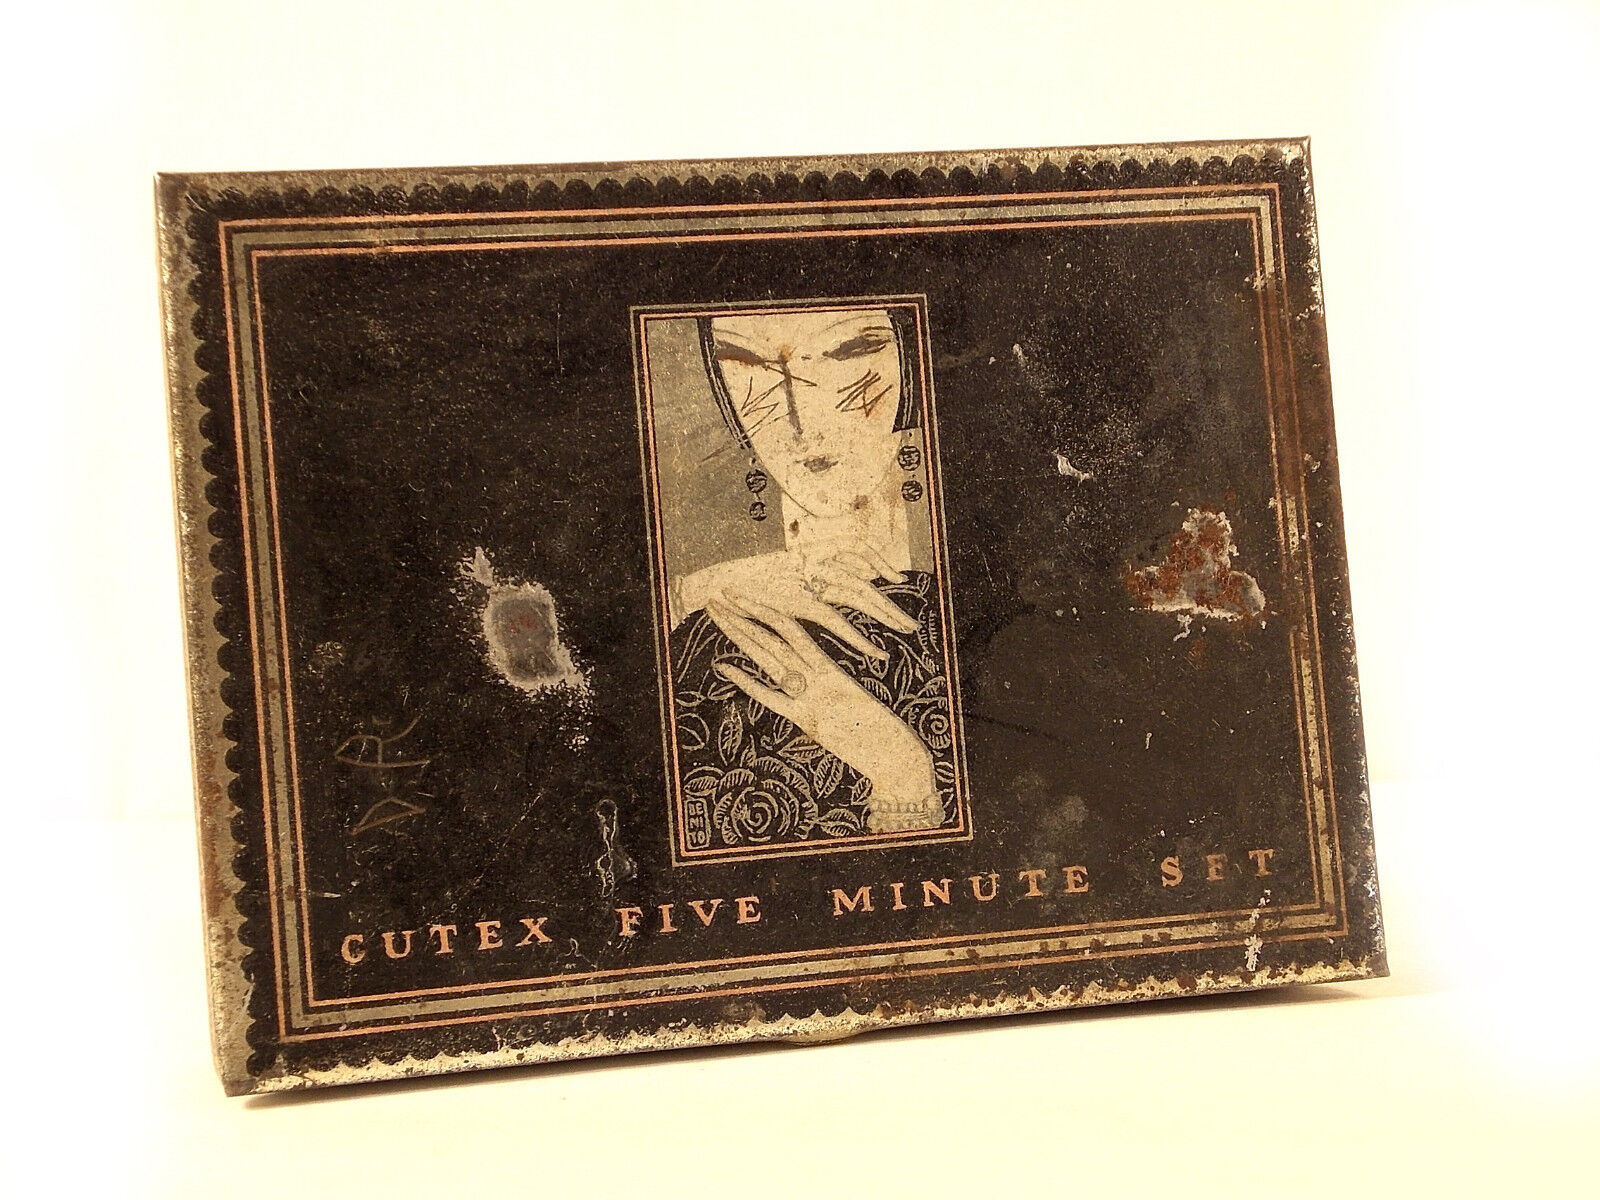 Vintage Cutex Five Minute Set 1920s  1930s Nail Polish Tin 